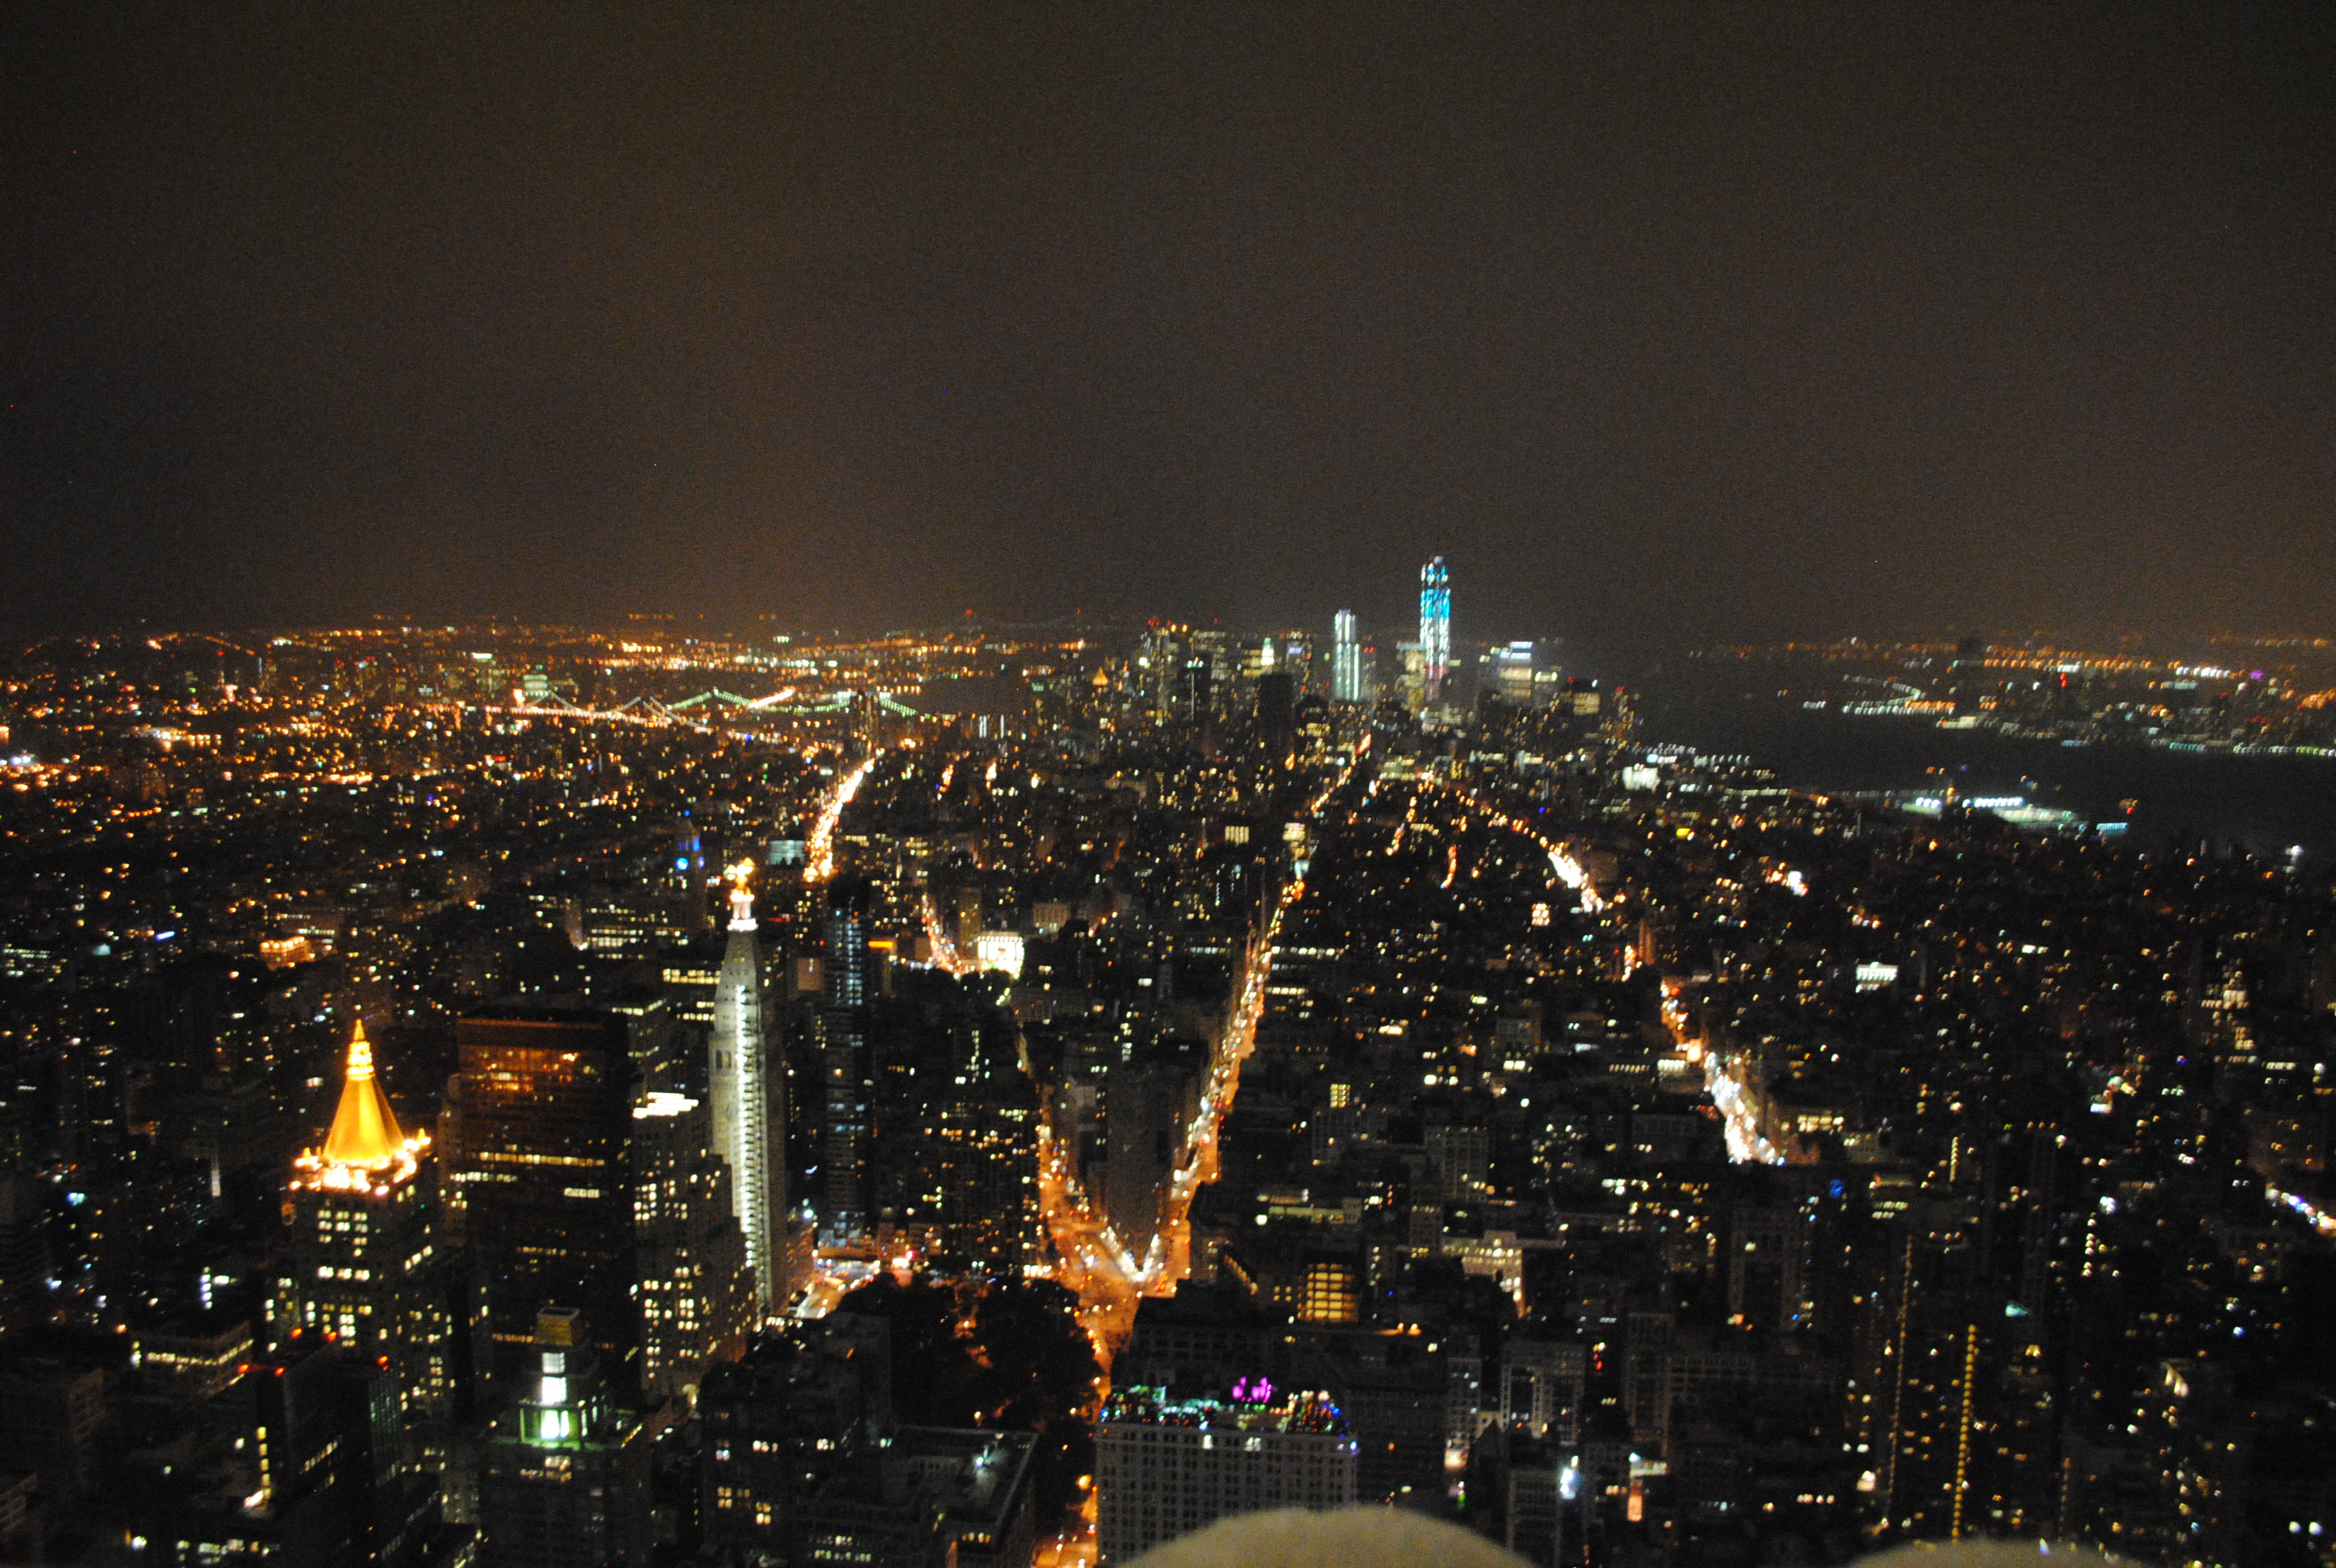 City at night photo